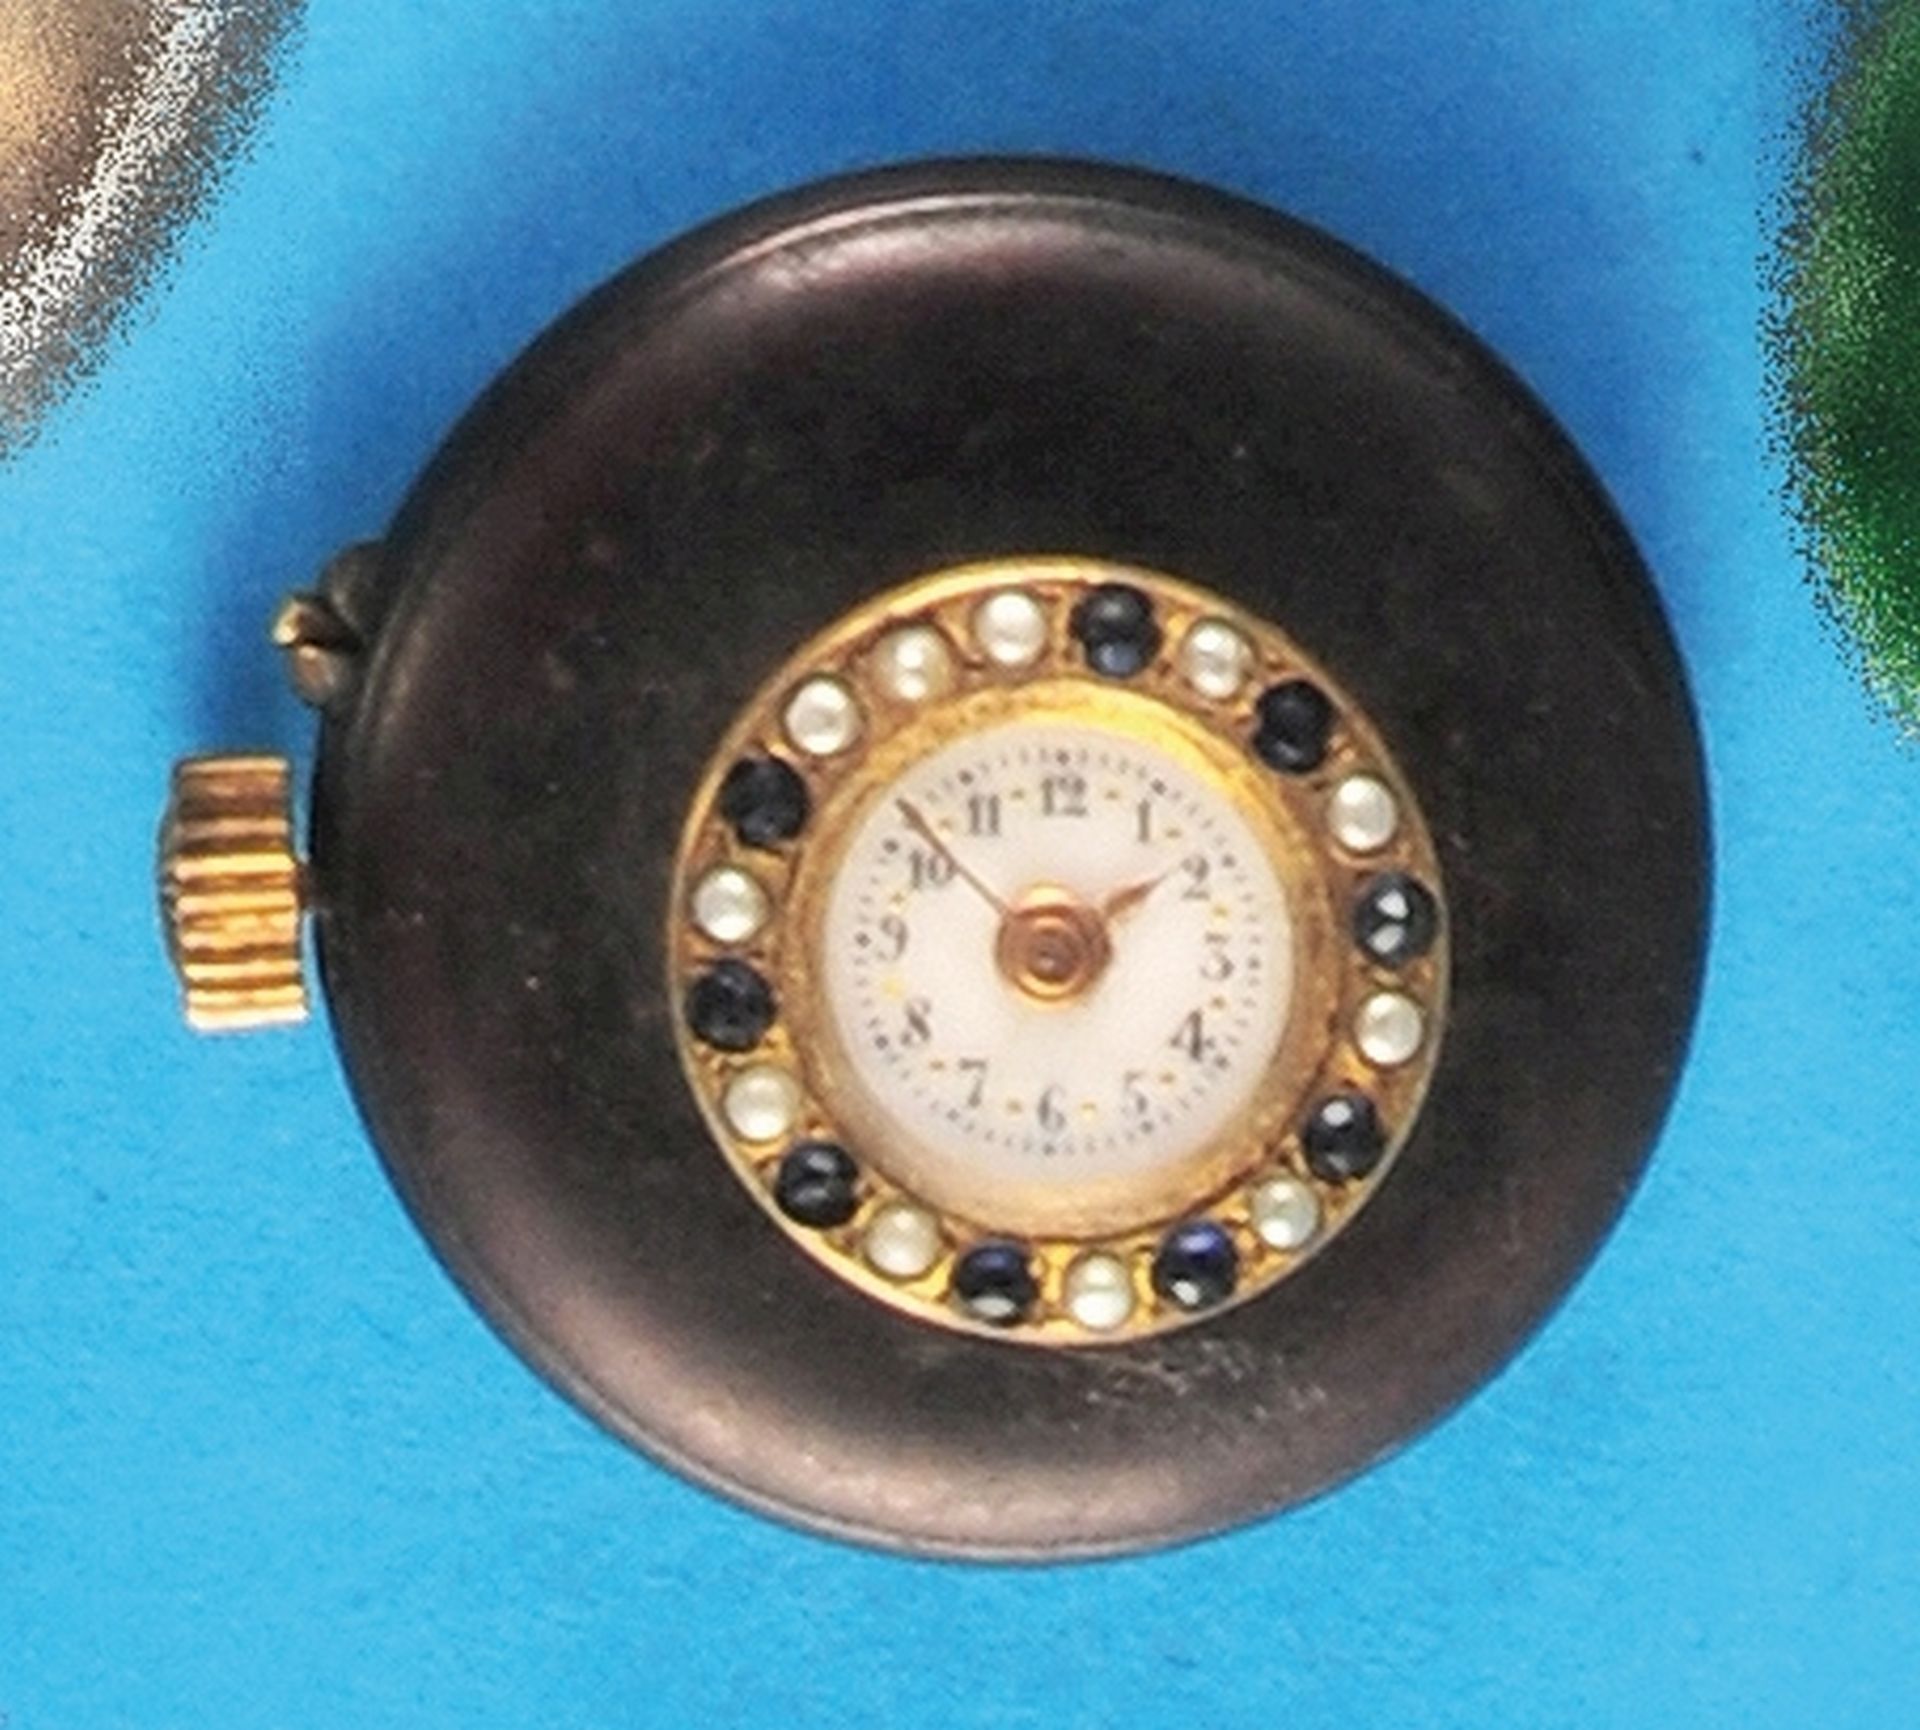 Buttonhole watch with gemstone bezel, burnished case, brass glass bezel